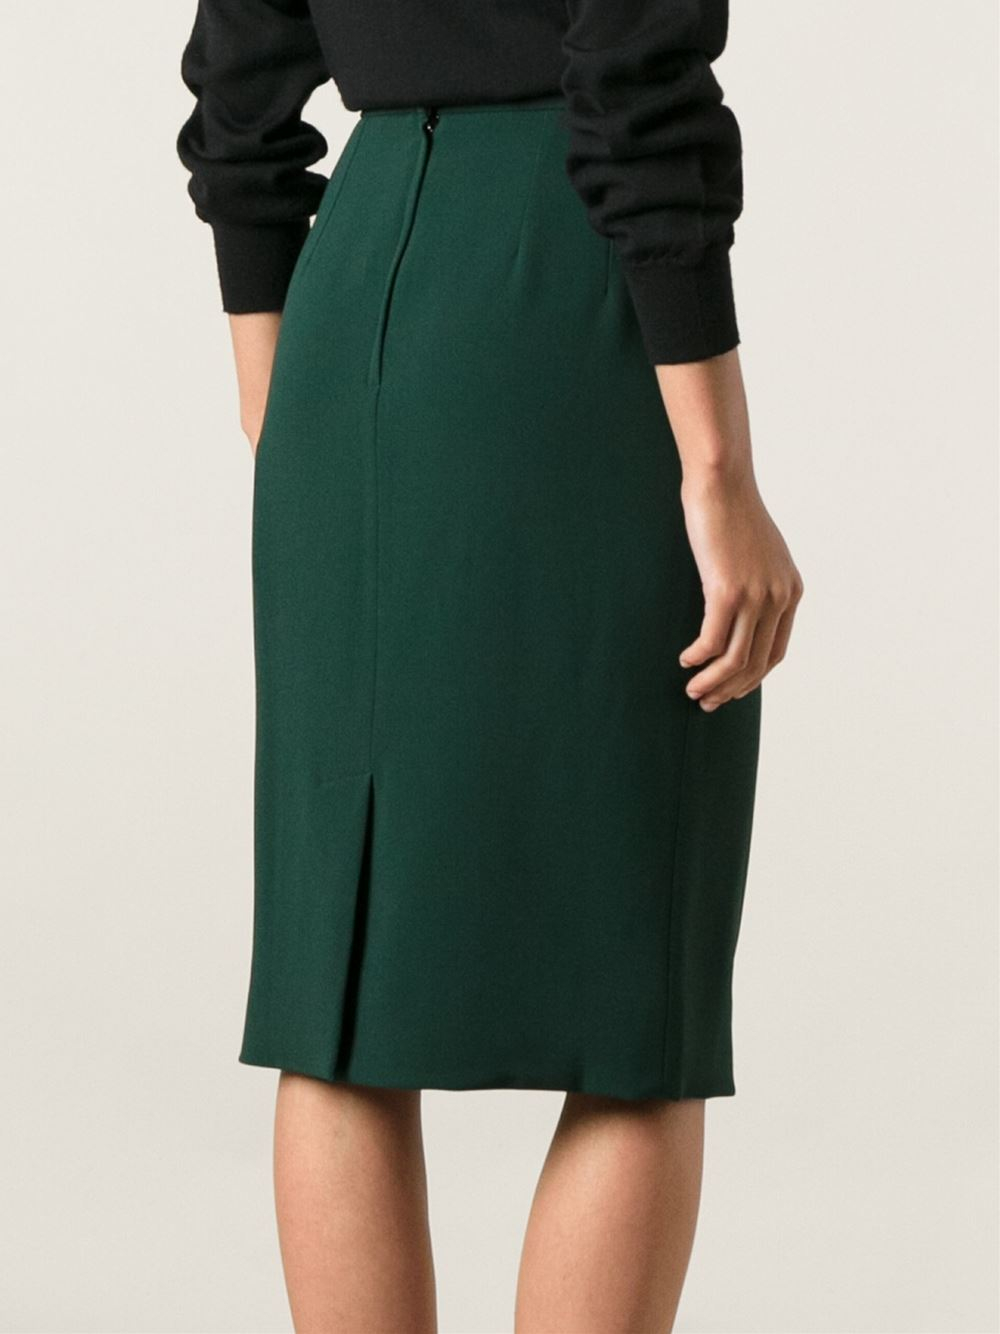 Lyst - Dolce & Gabbana Classic Midi Skirt in Green